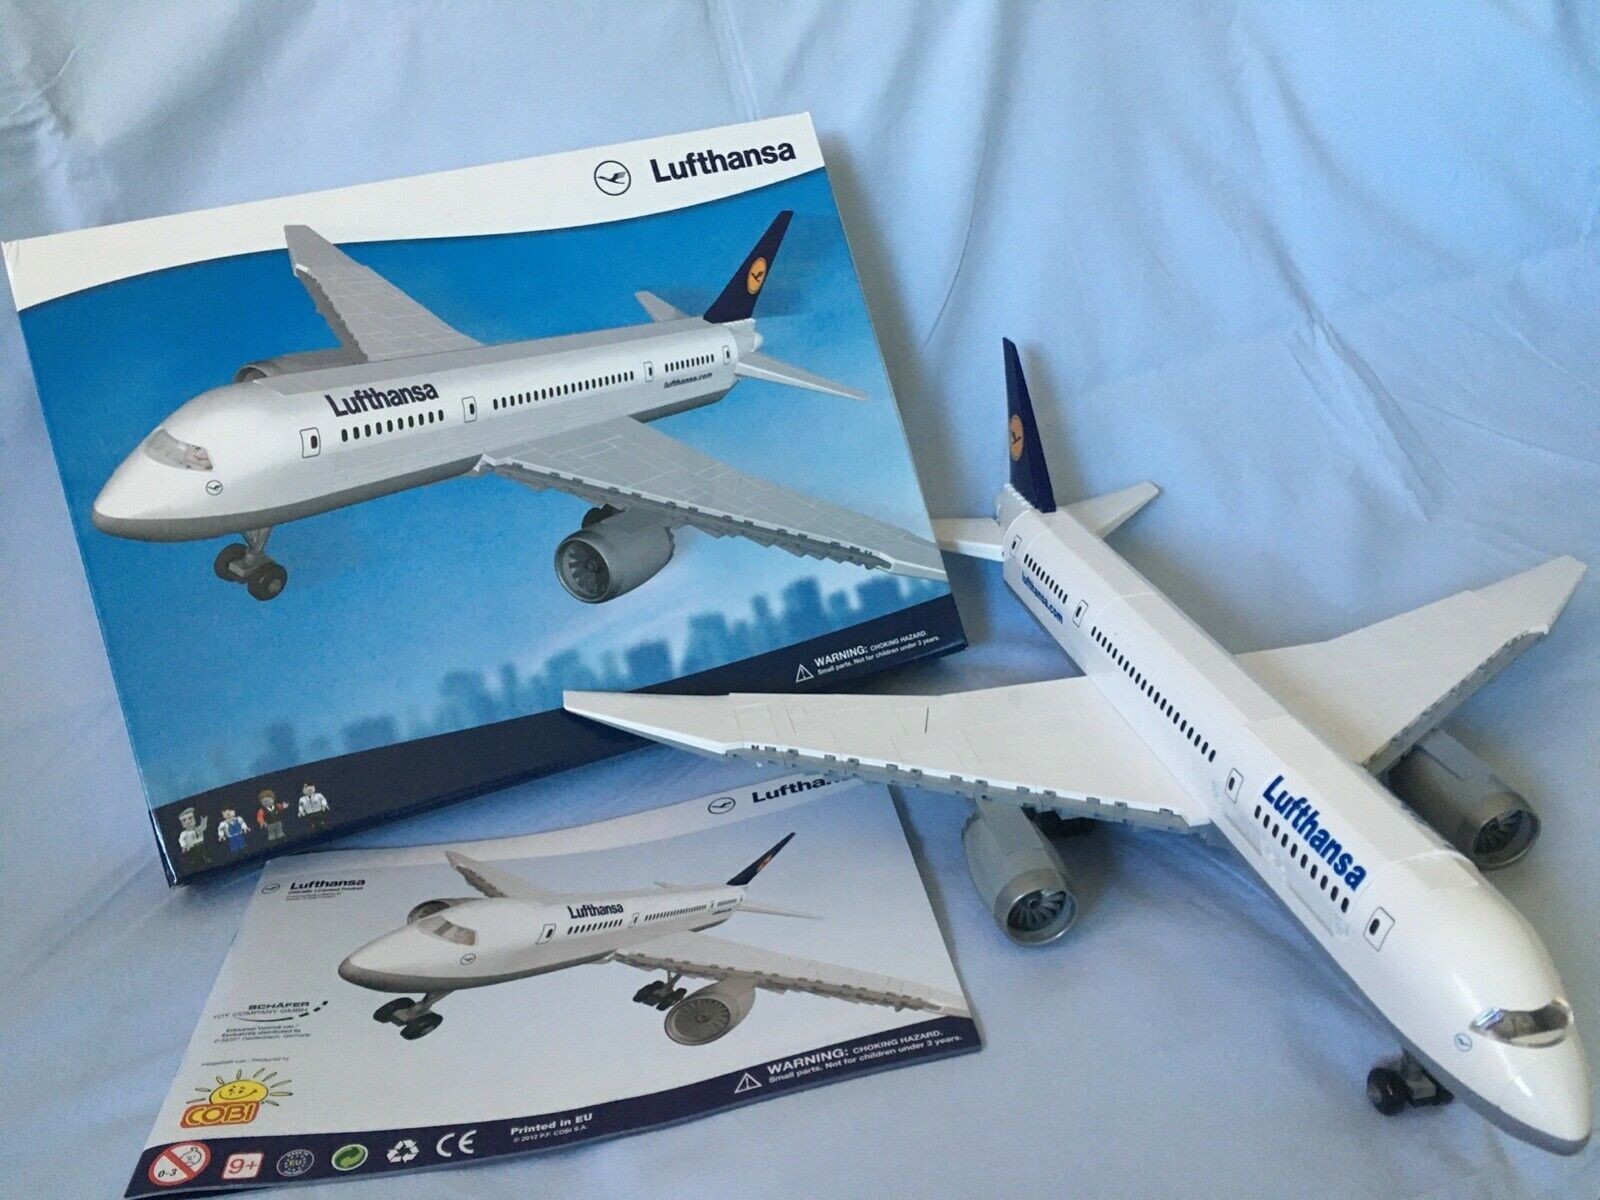 099794 - Lufthansa Plane